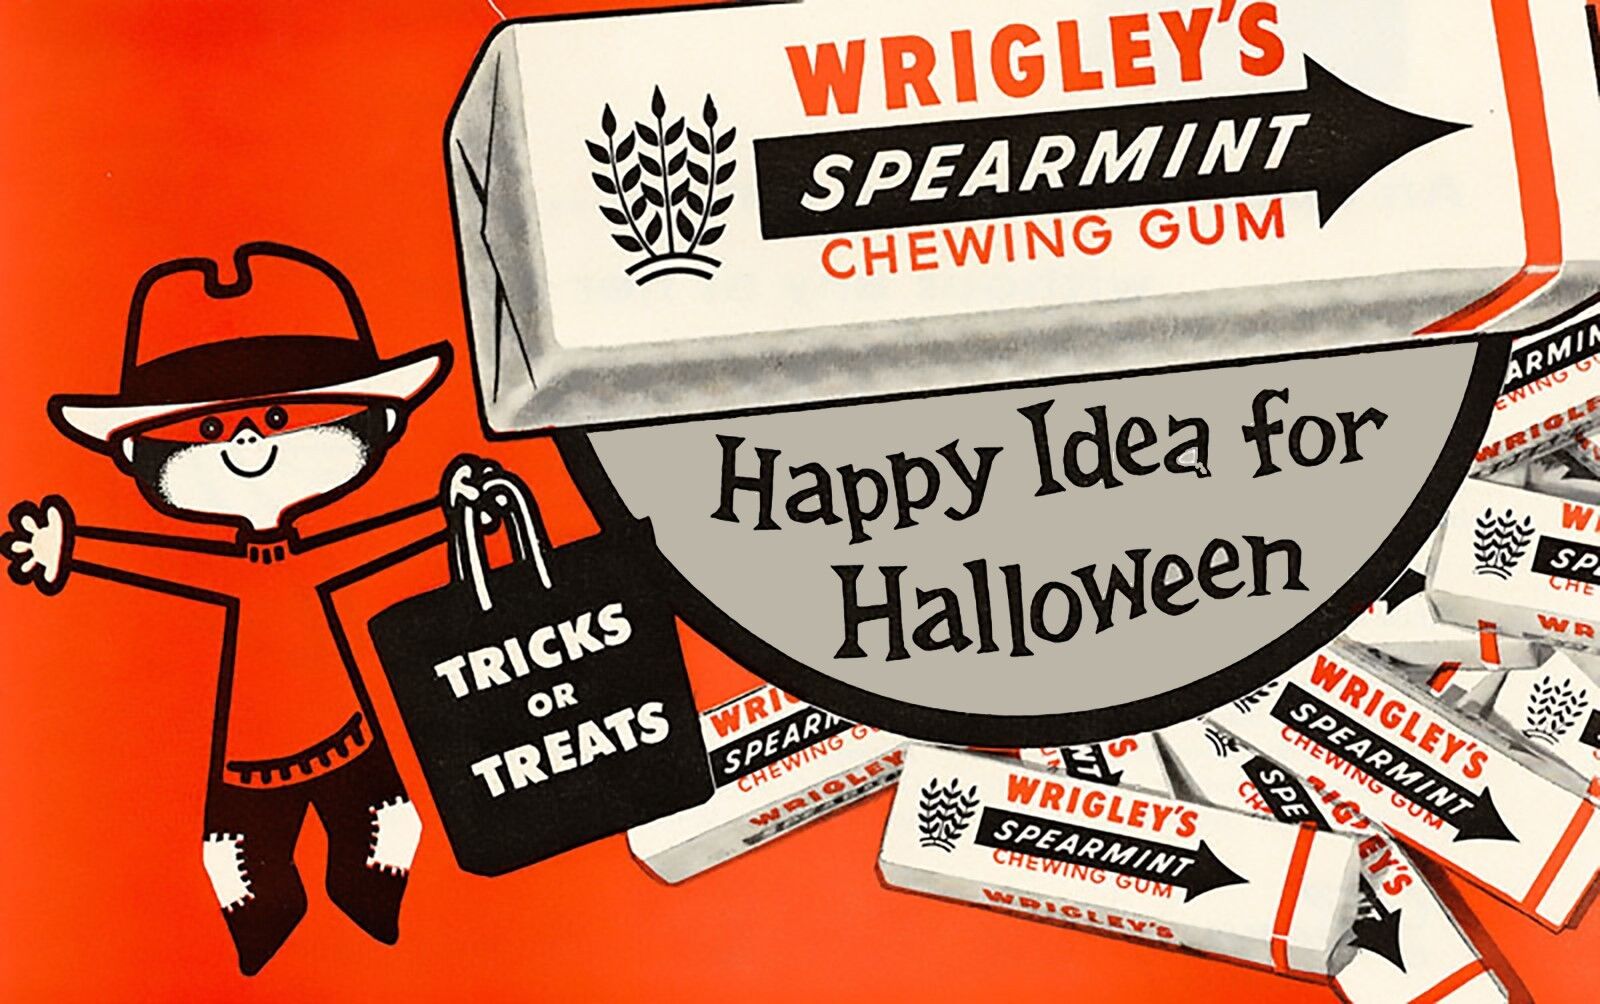 Wrigleys Gum Advertising Halloween High Quality Metal Fridge Magnet 3 x 4 9688